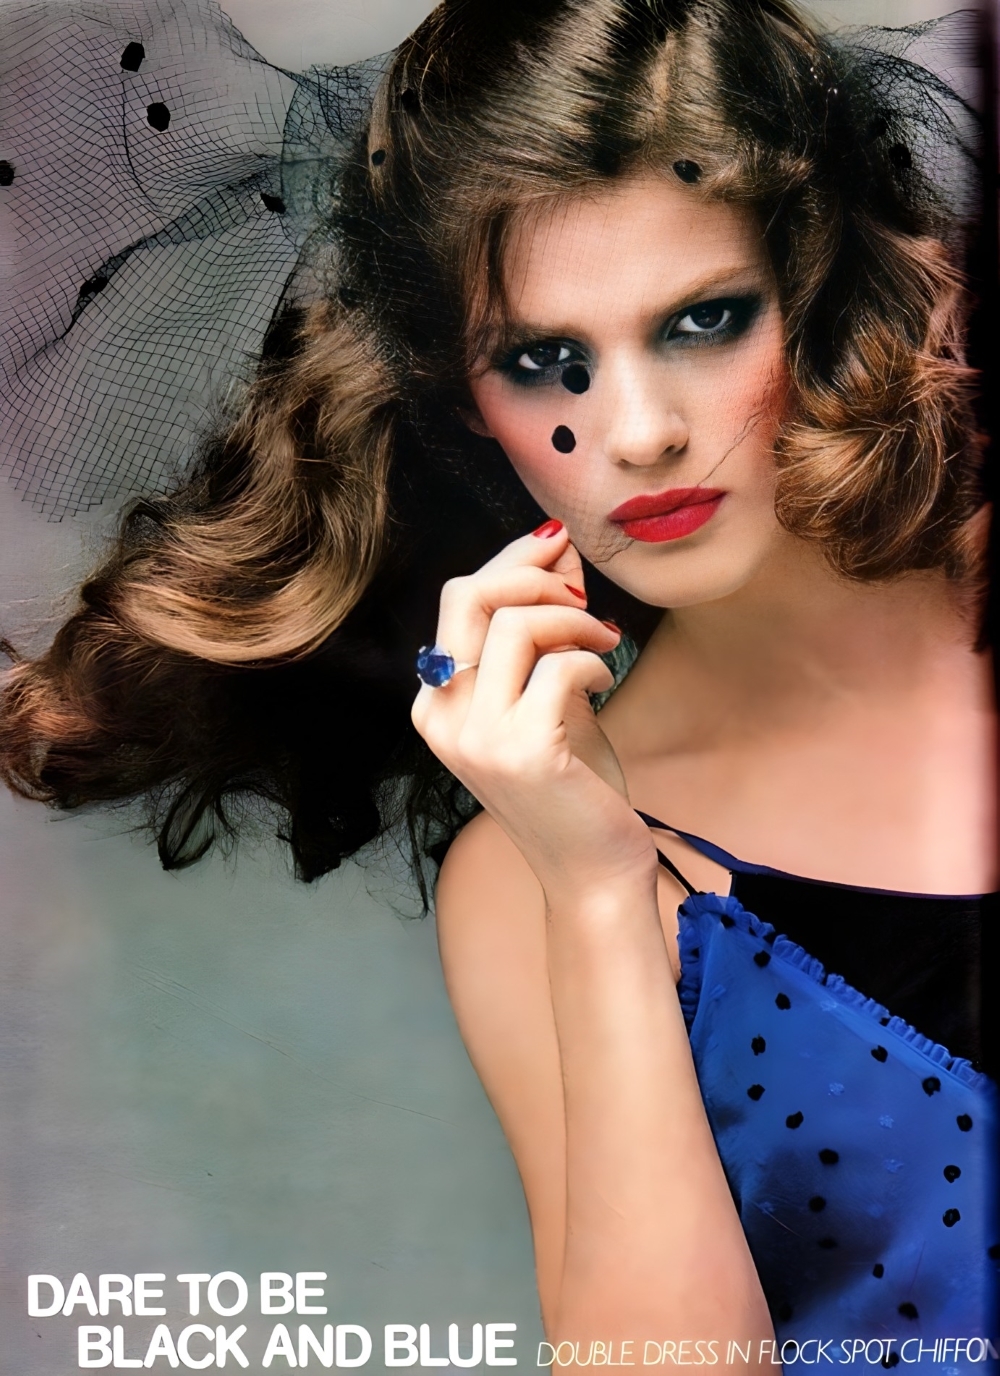 Gia Carangi. Vogue UK April 1, 1979. Photographer Alex Chatelain. Hairstylist Gilles. Makeup artist Jacques Clemente.